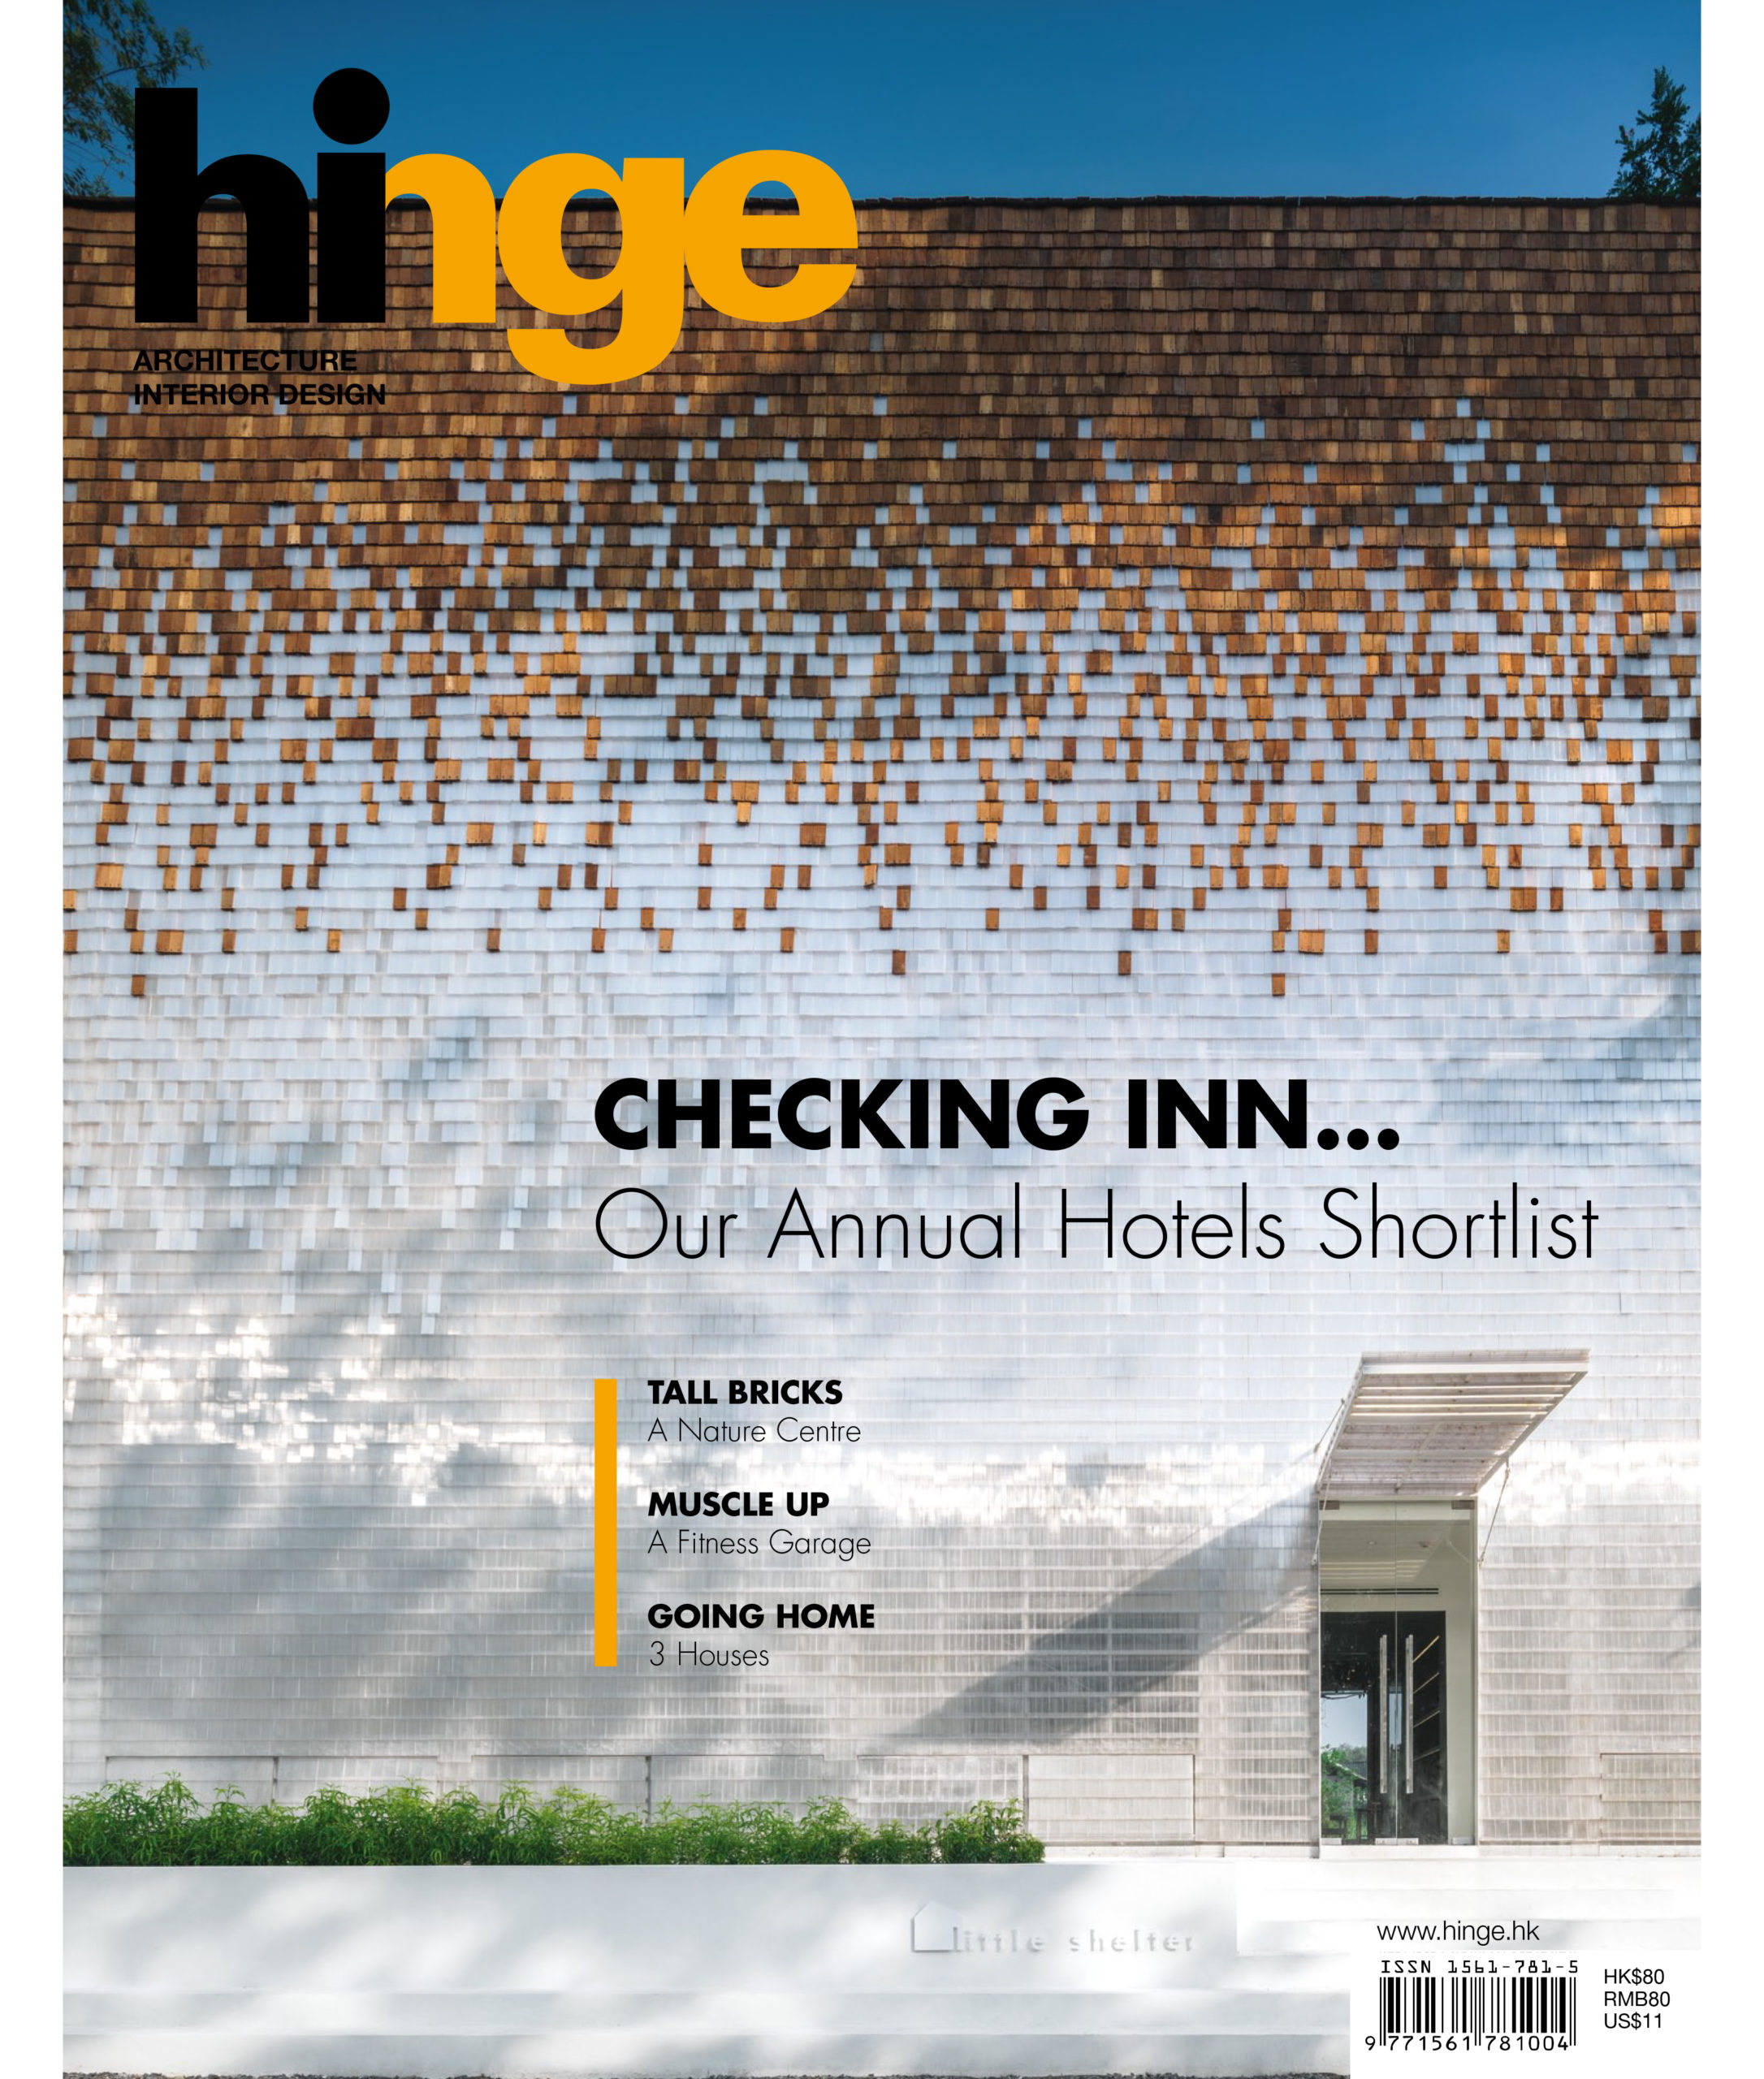 Hinge Magazine Hong Kong, Roscommon House